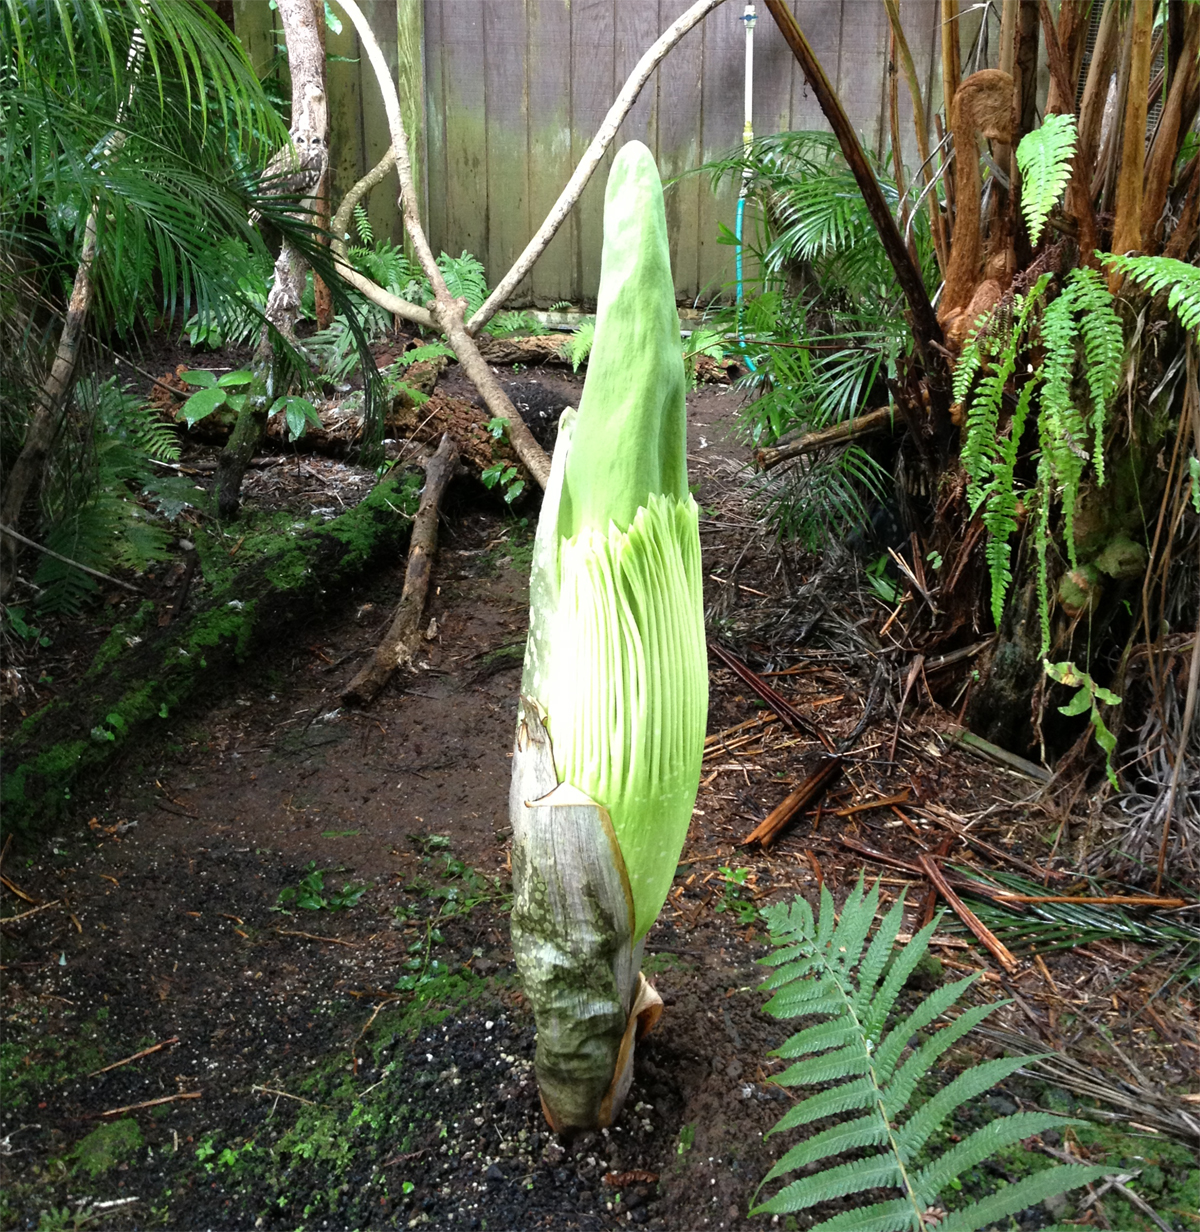 Rare “Corpse flower” bloom begins in Hilo, Hawaii